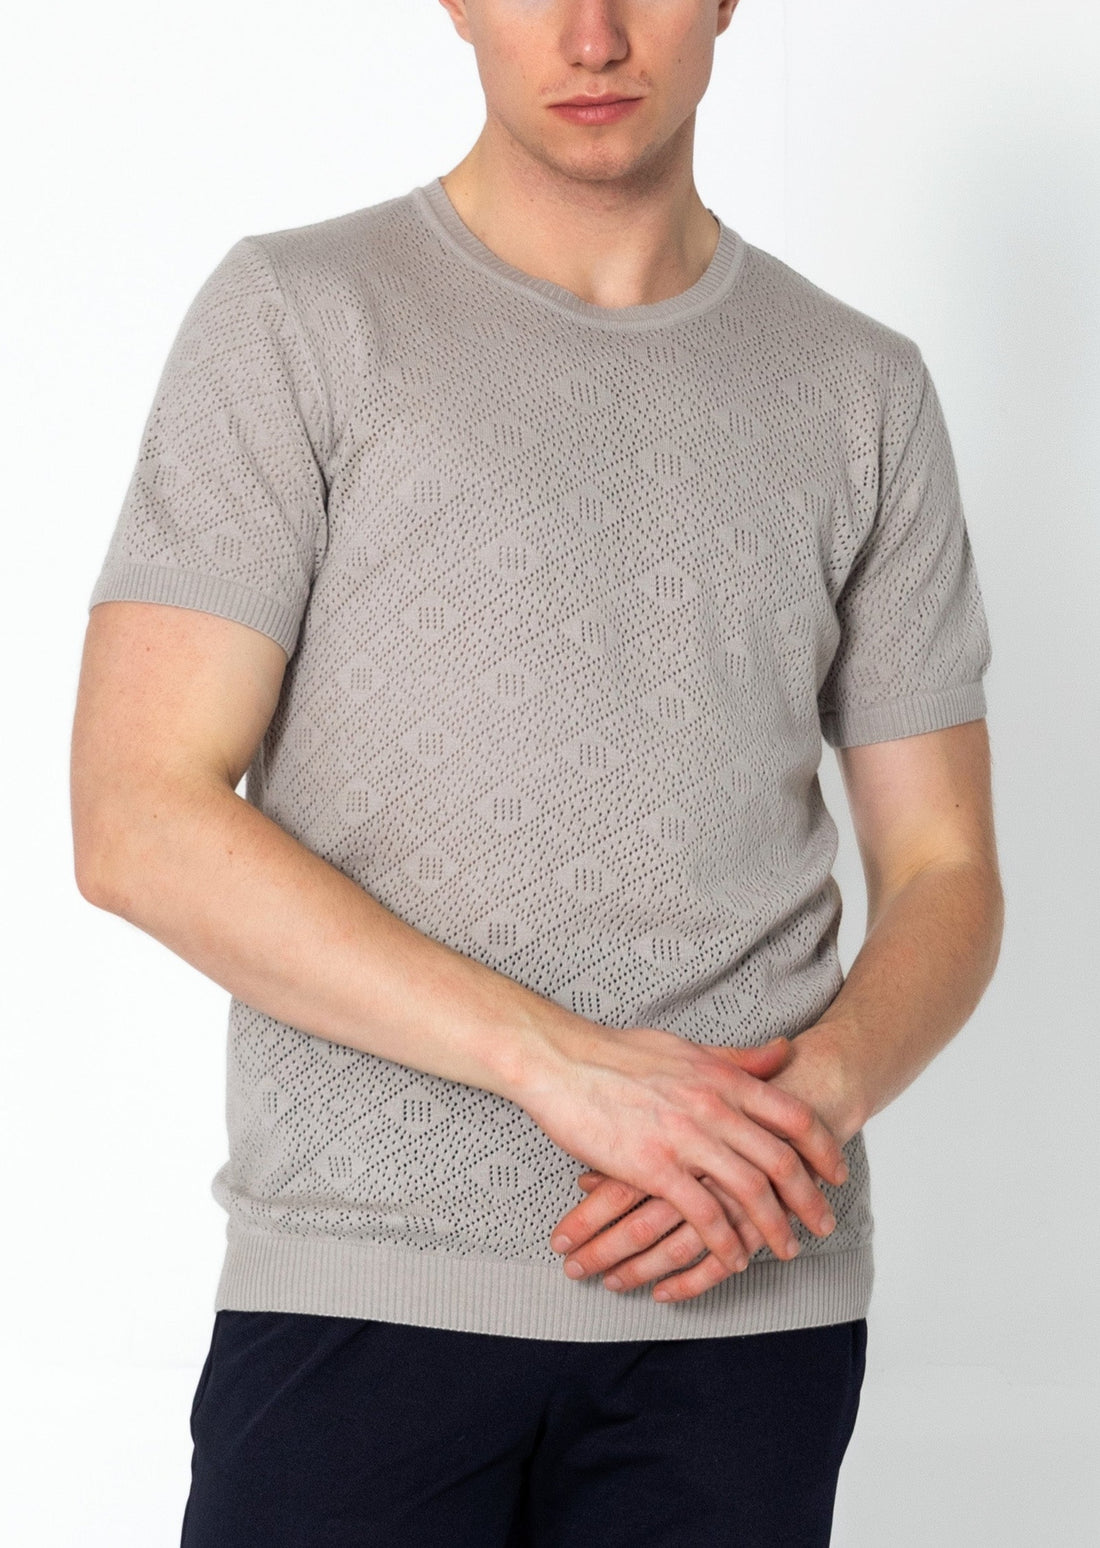 Geometric Crochet Knit Top - Grey